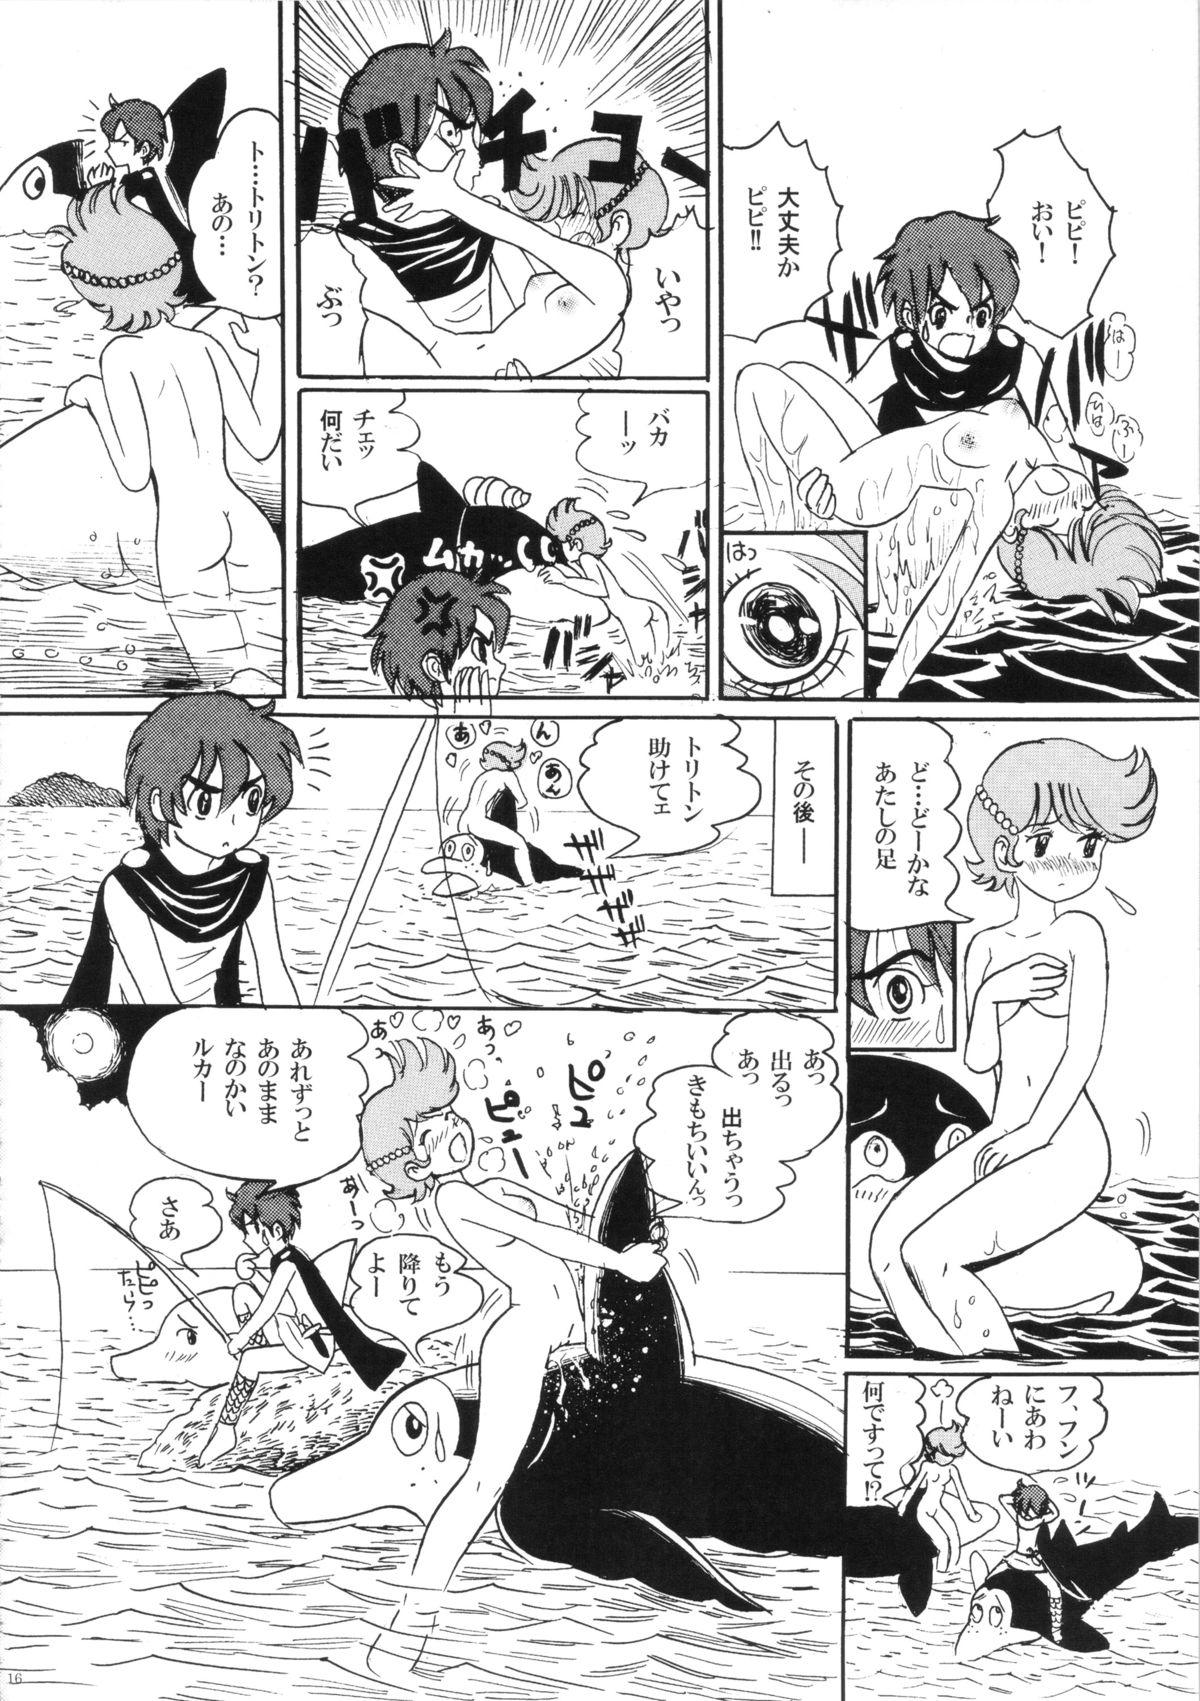 FLOUR2 Tezuka Manga Graffiti 15